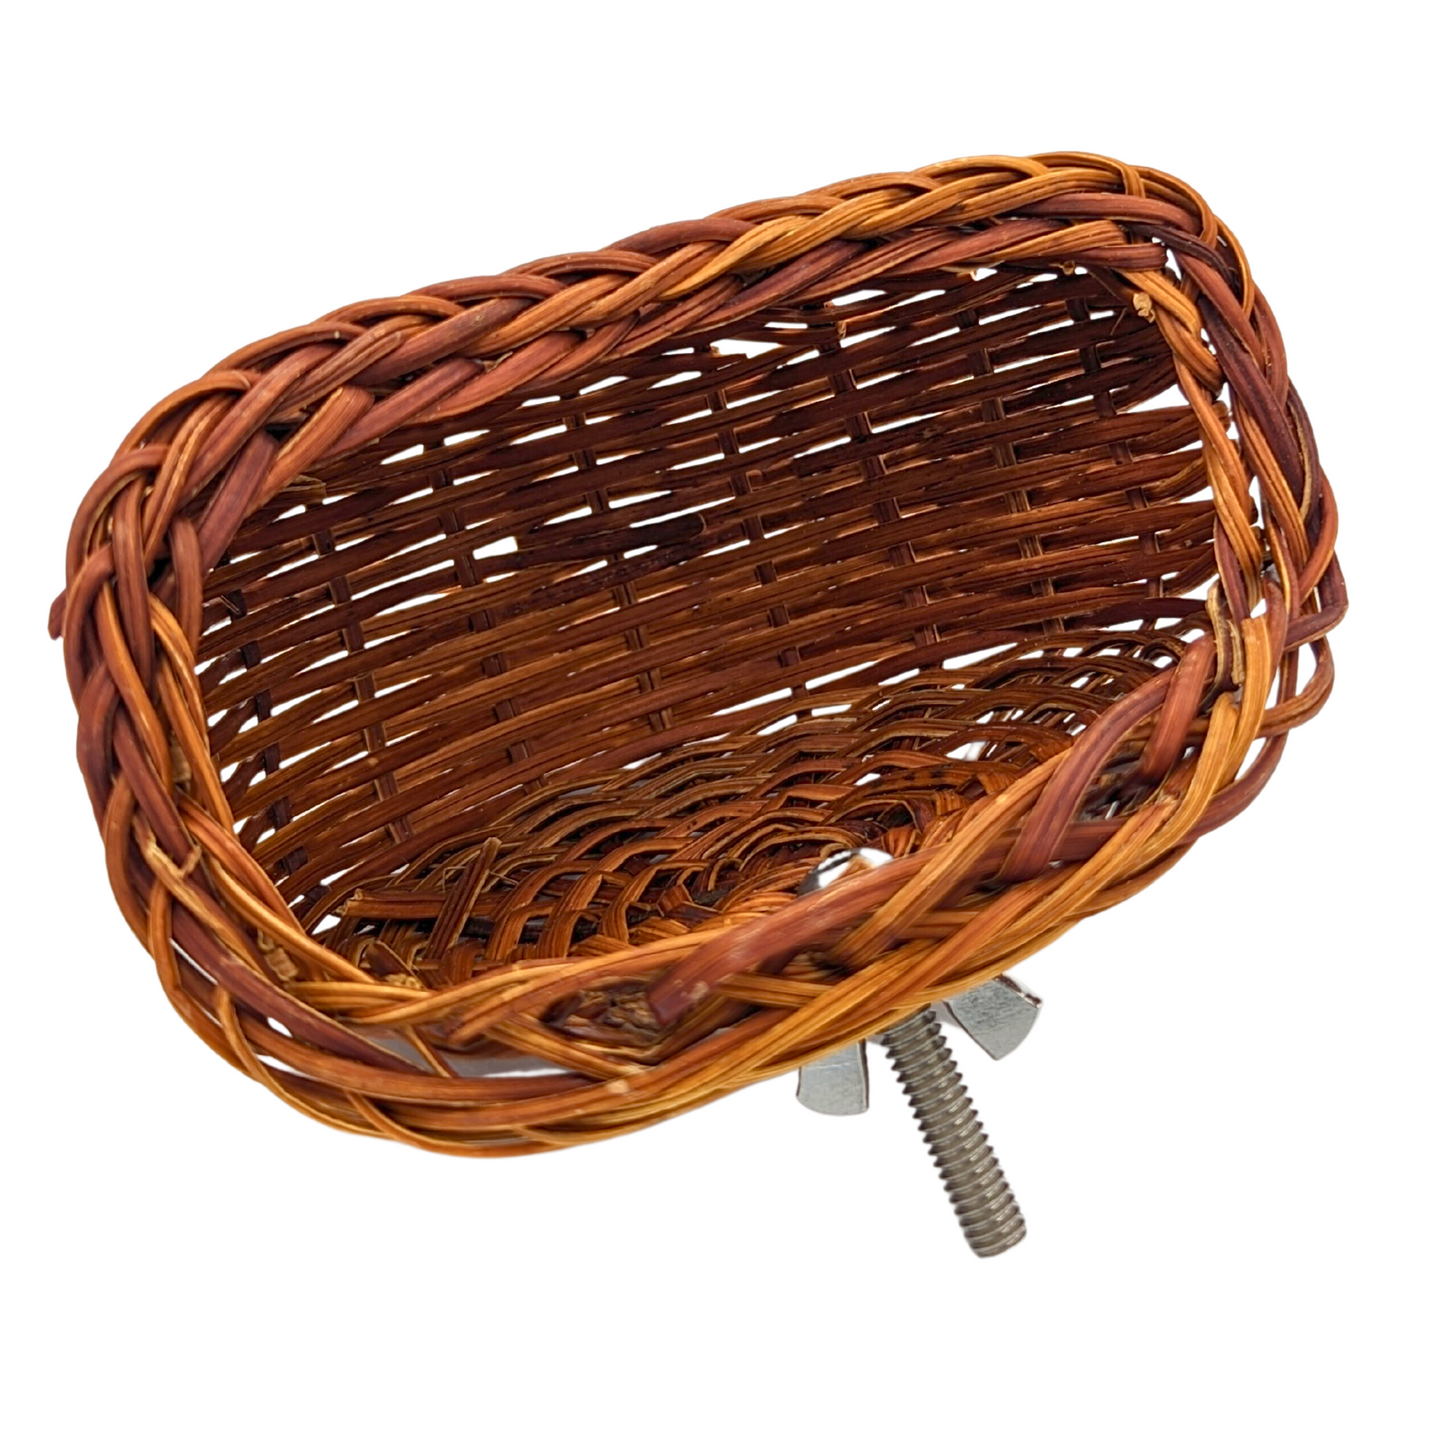 Toy Basket